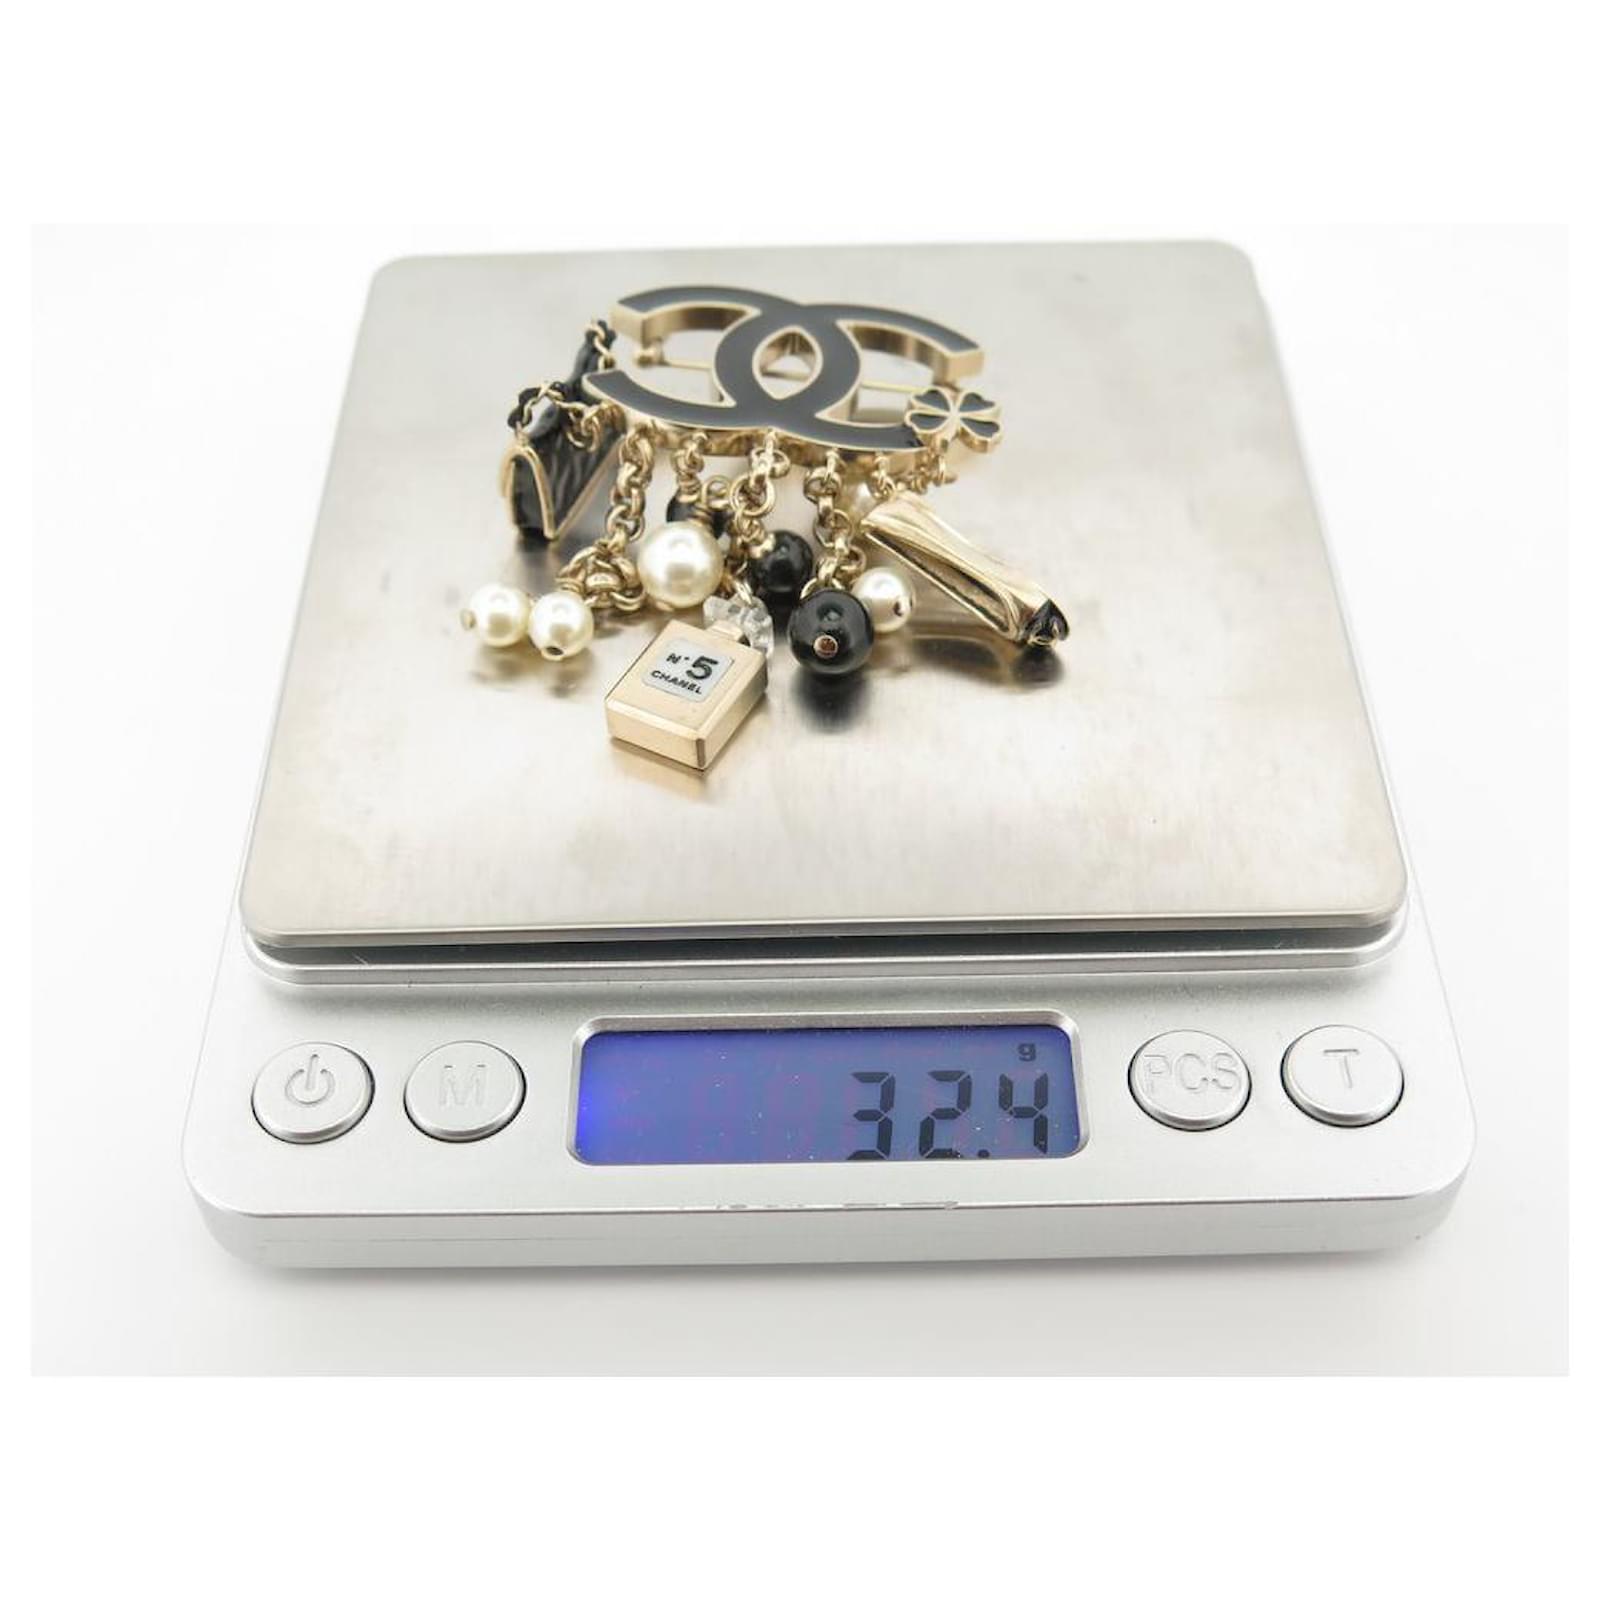 Chanel Vintage Gold Metal Rhinestone CC Charm Evening Pin Brooch in Box